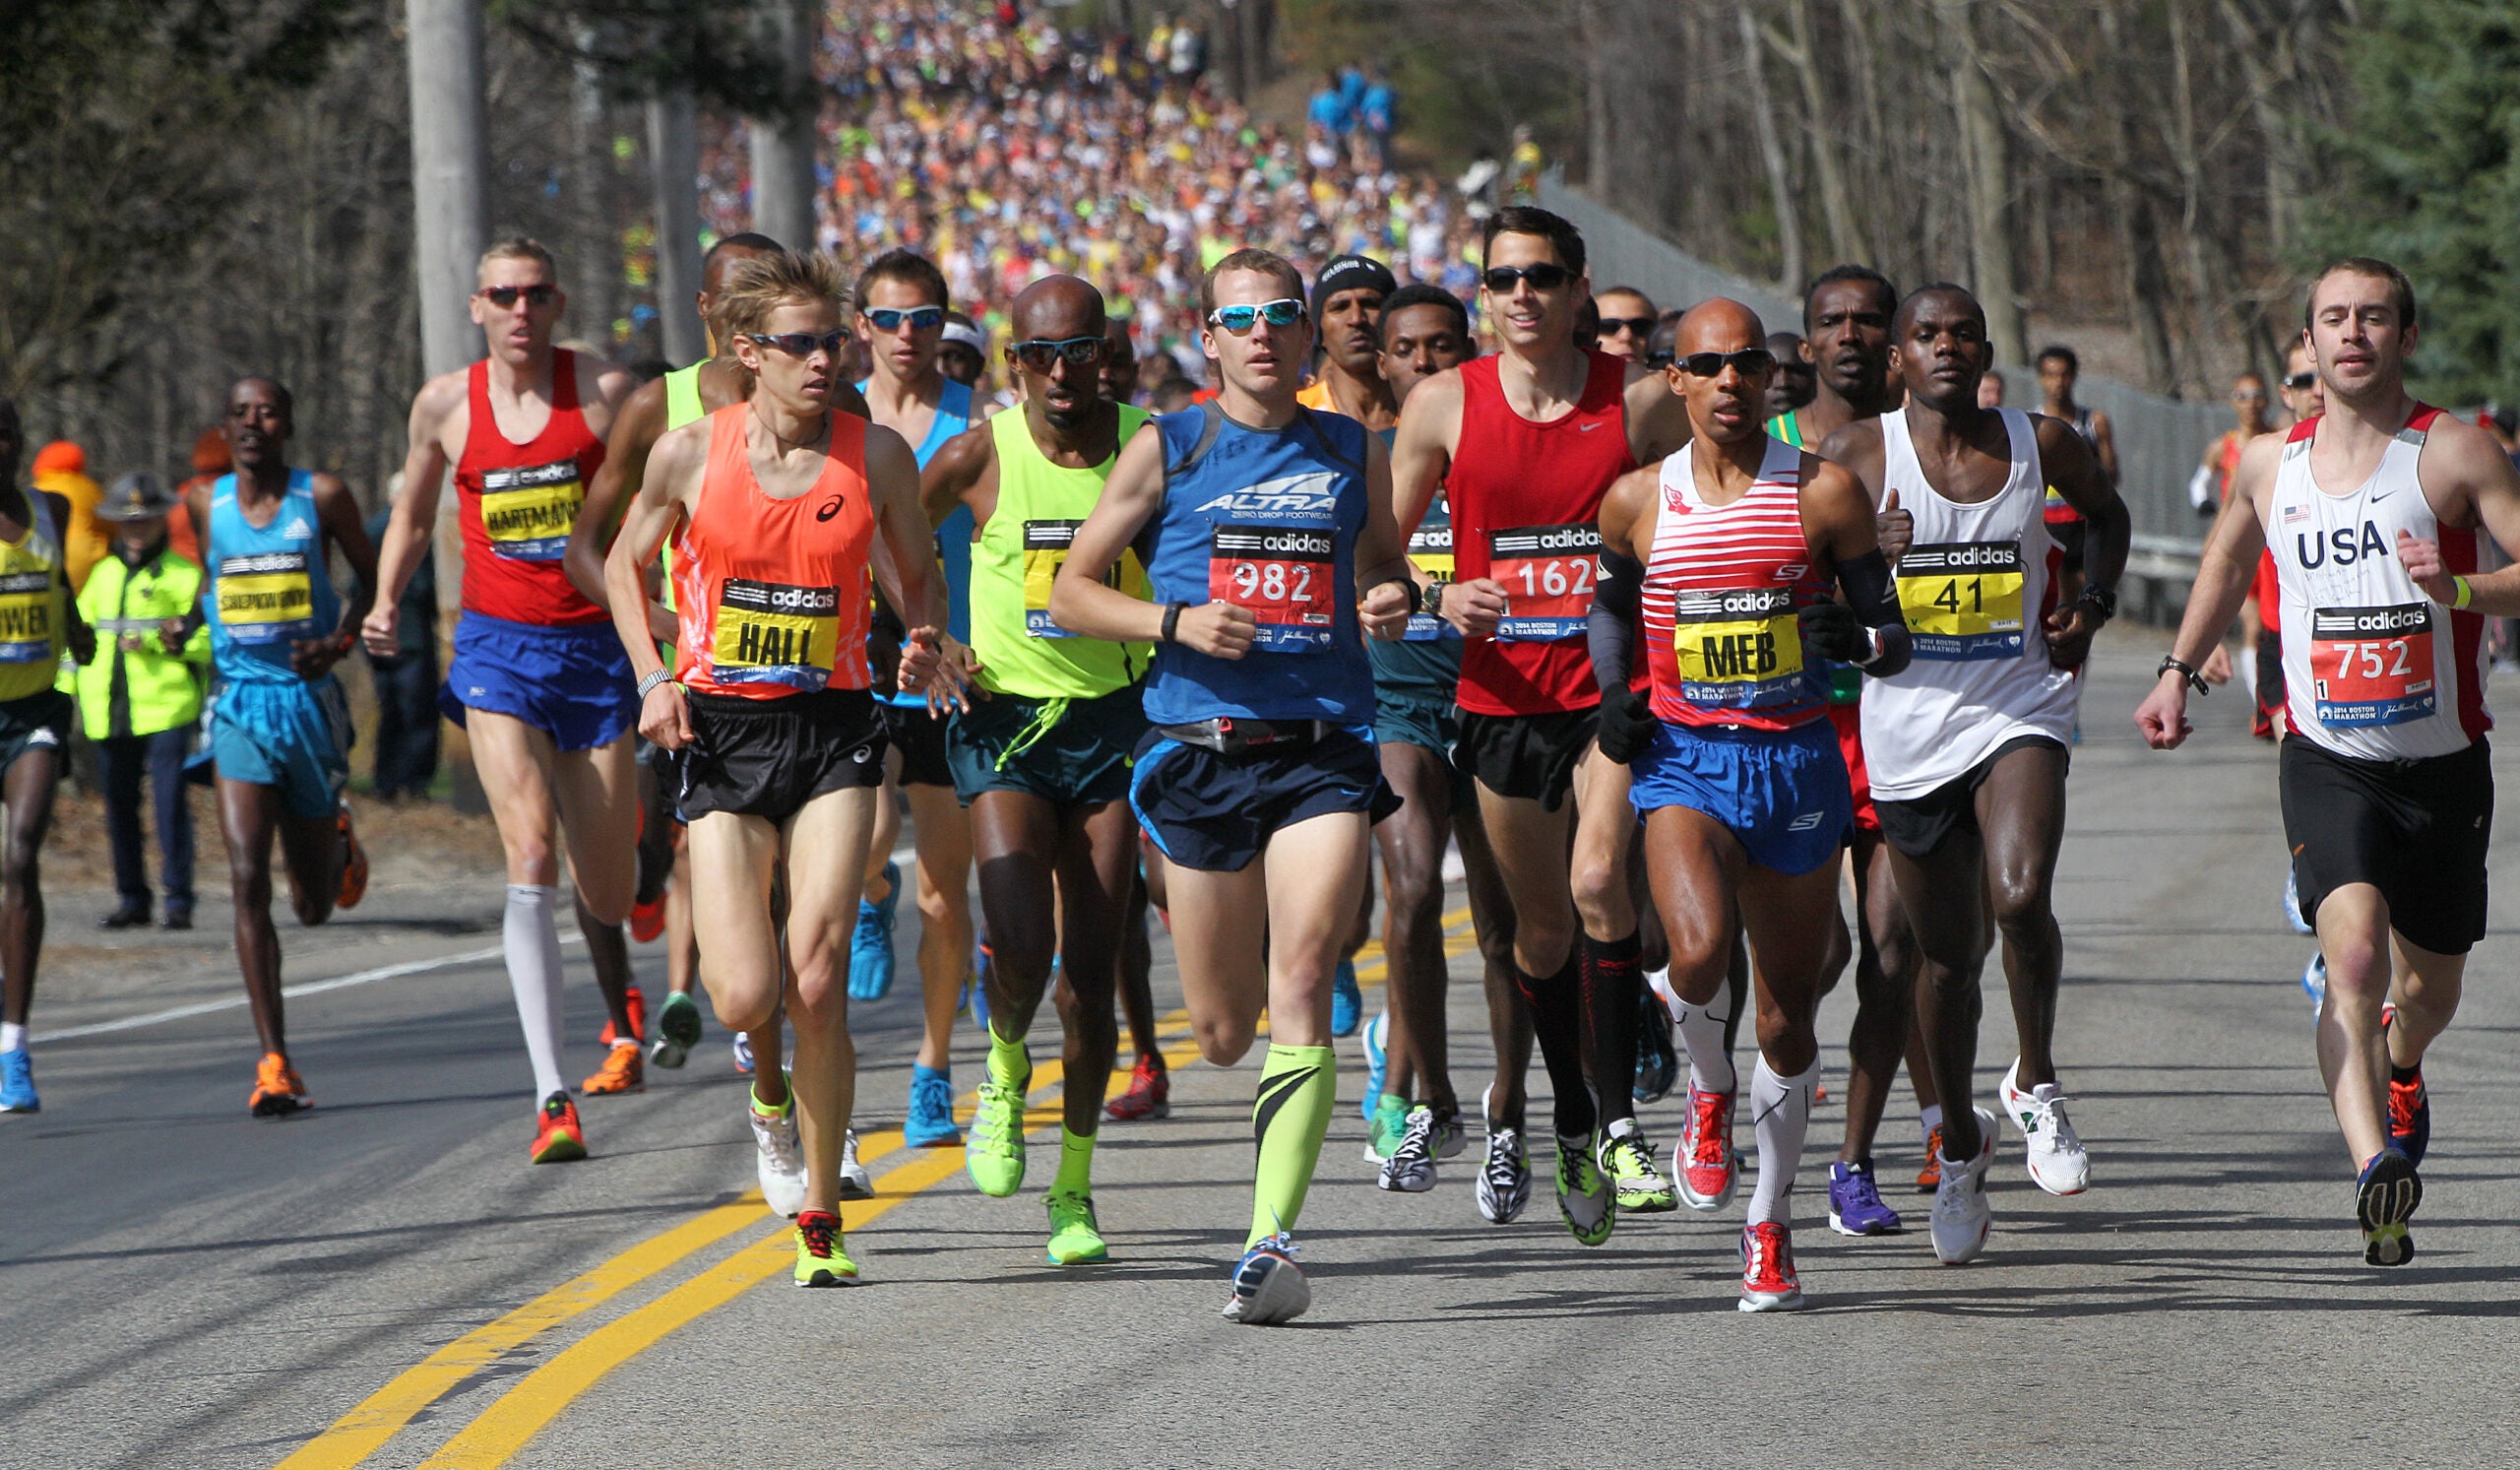 Ryan Dempster, Brock Holt run Boston Marathon ten years after bombing